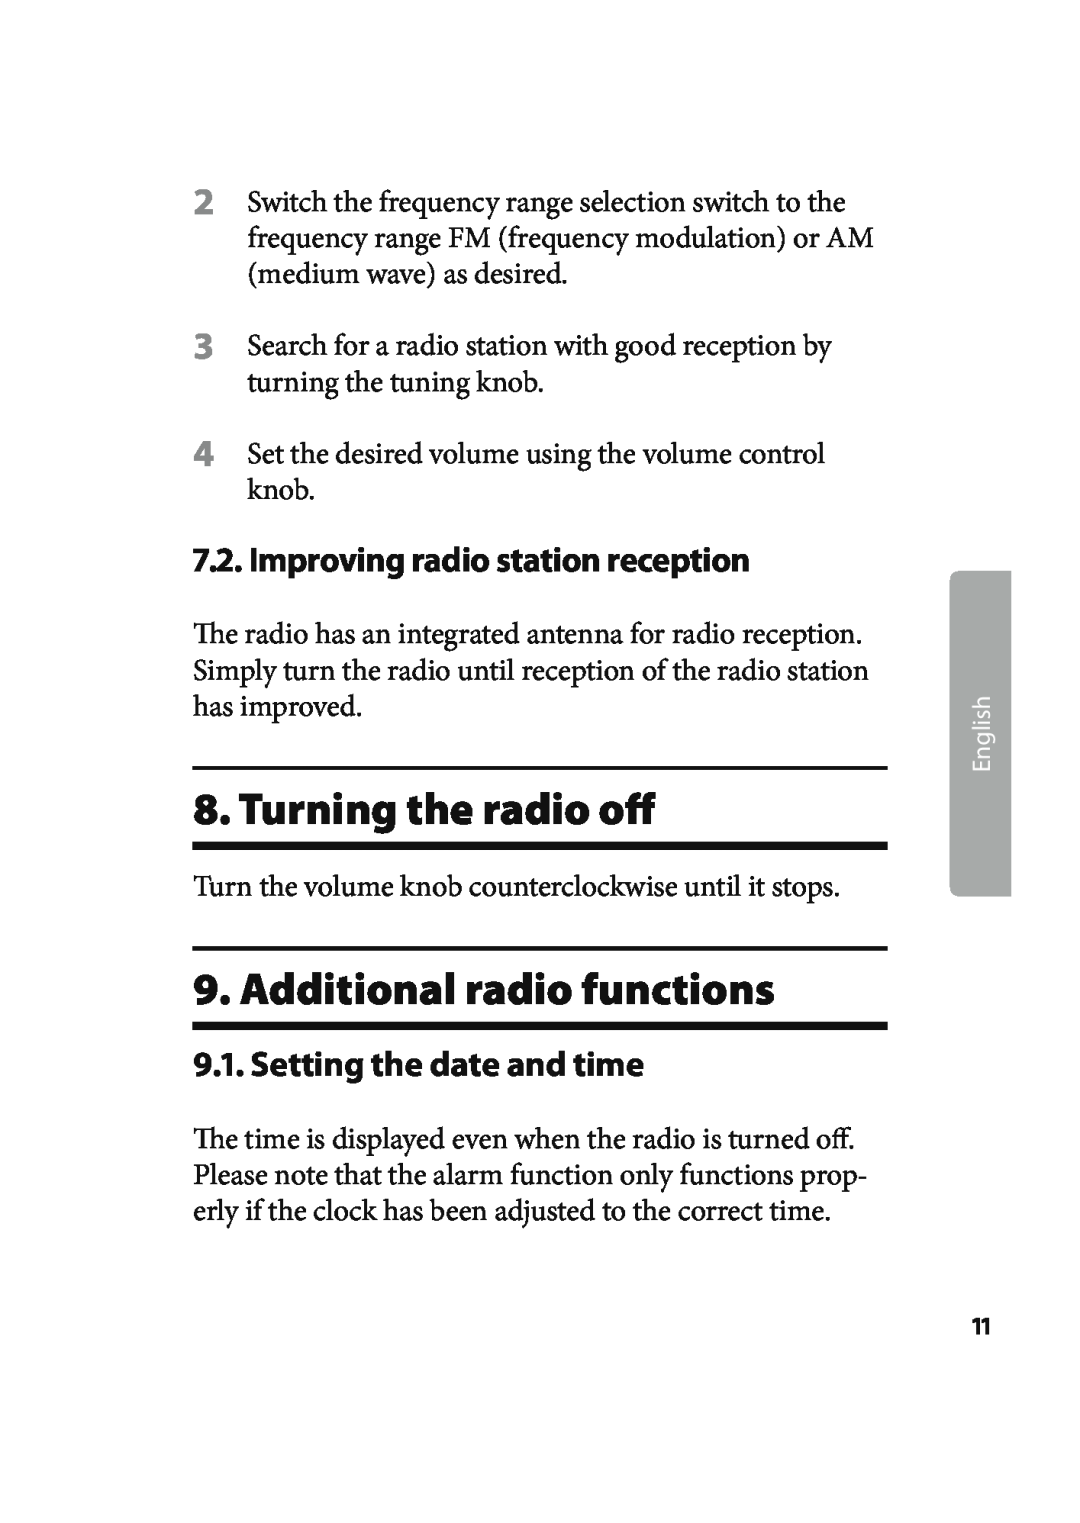 Kompernass KH 2245 manual Turning the radio oﬀ, Additional radio functions, Improving radio station reception 